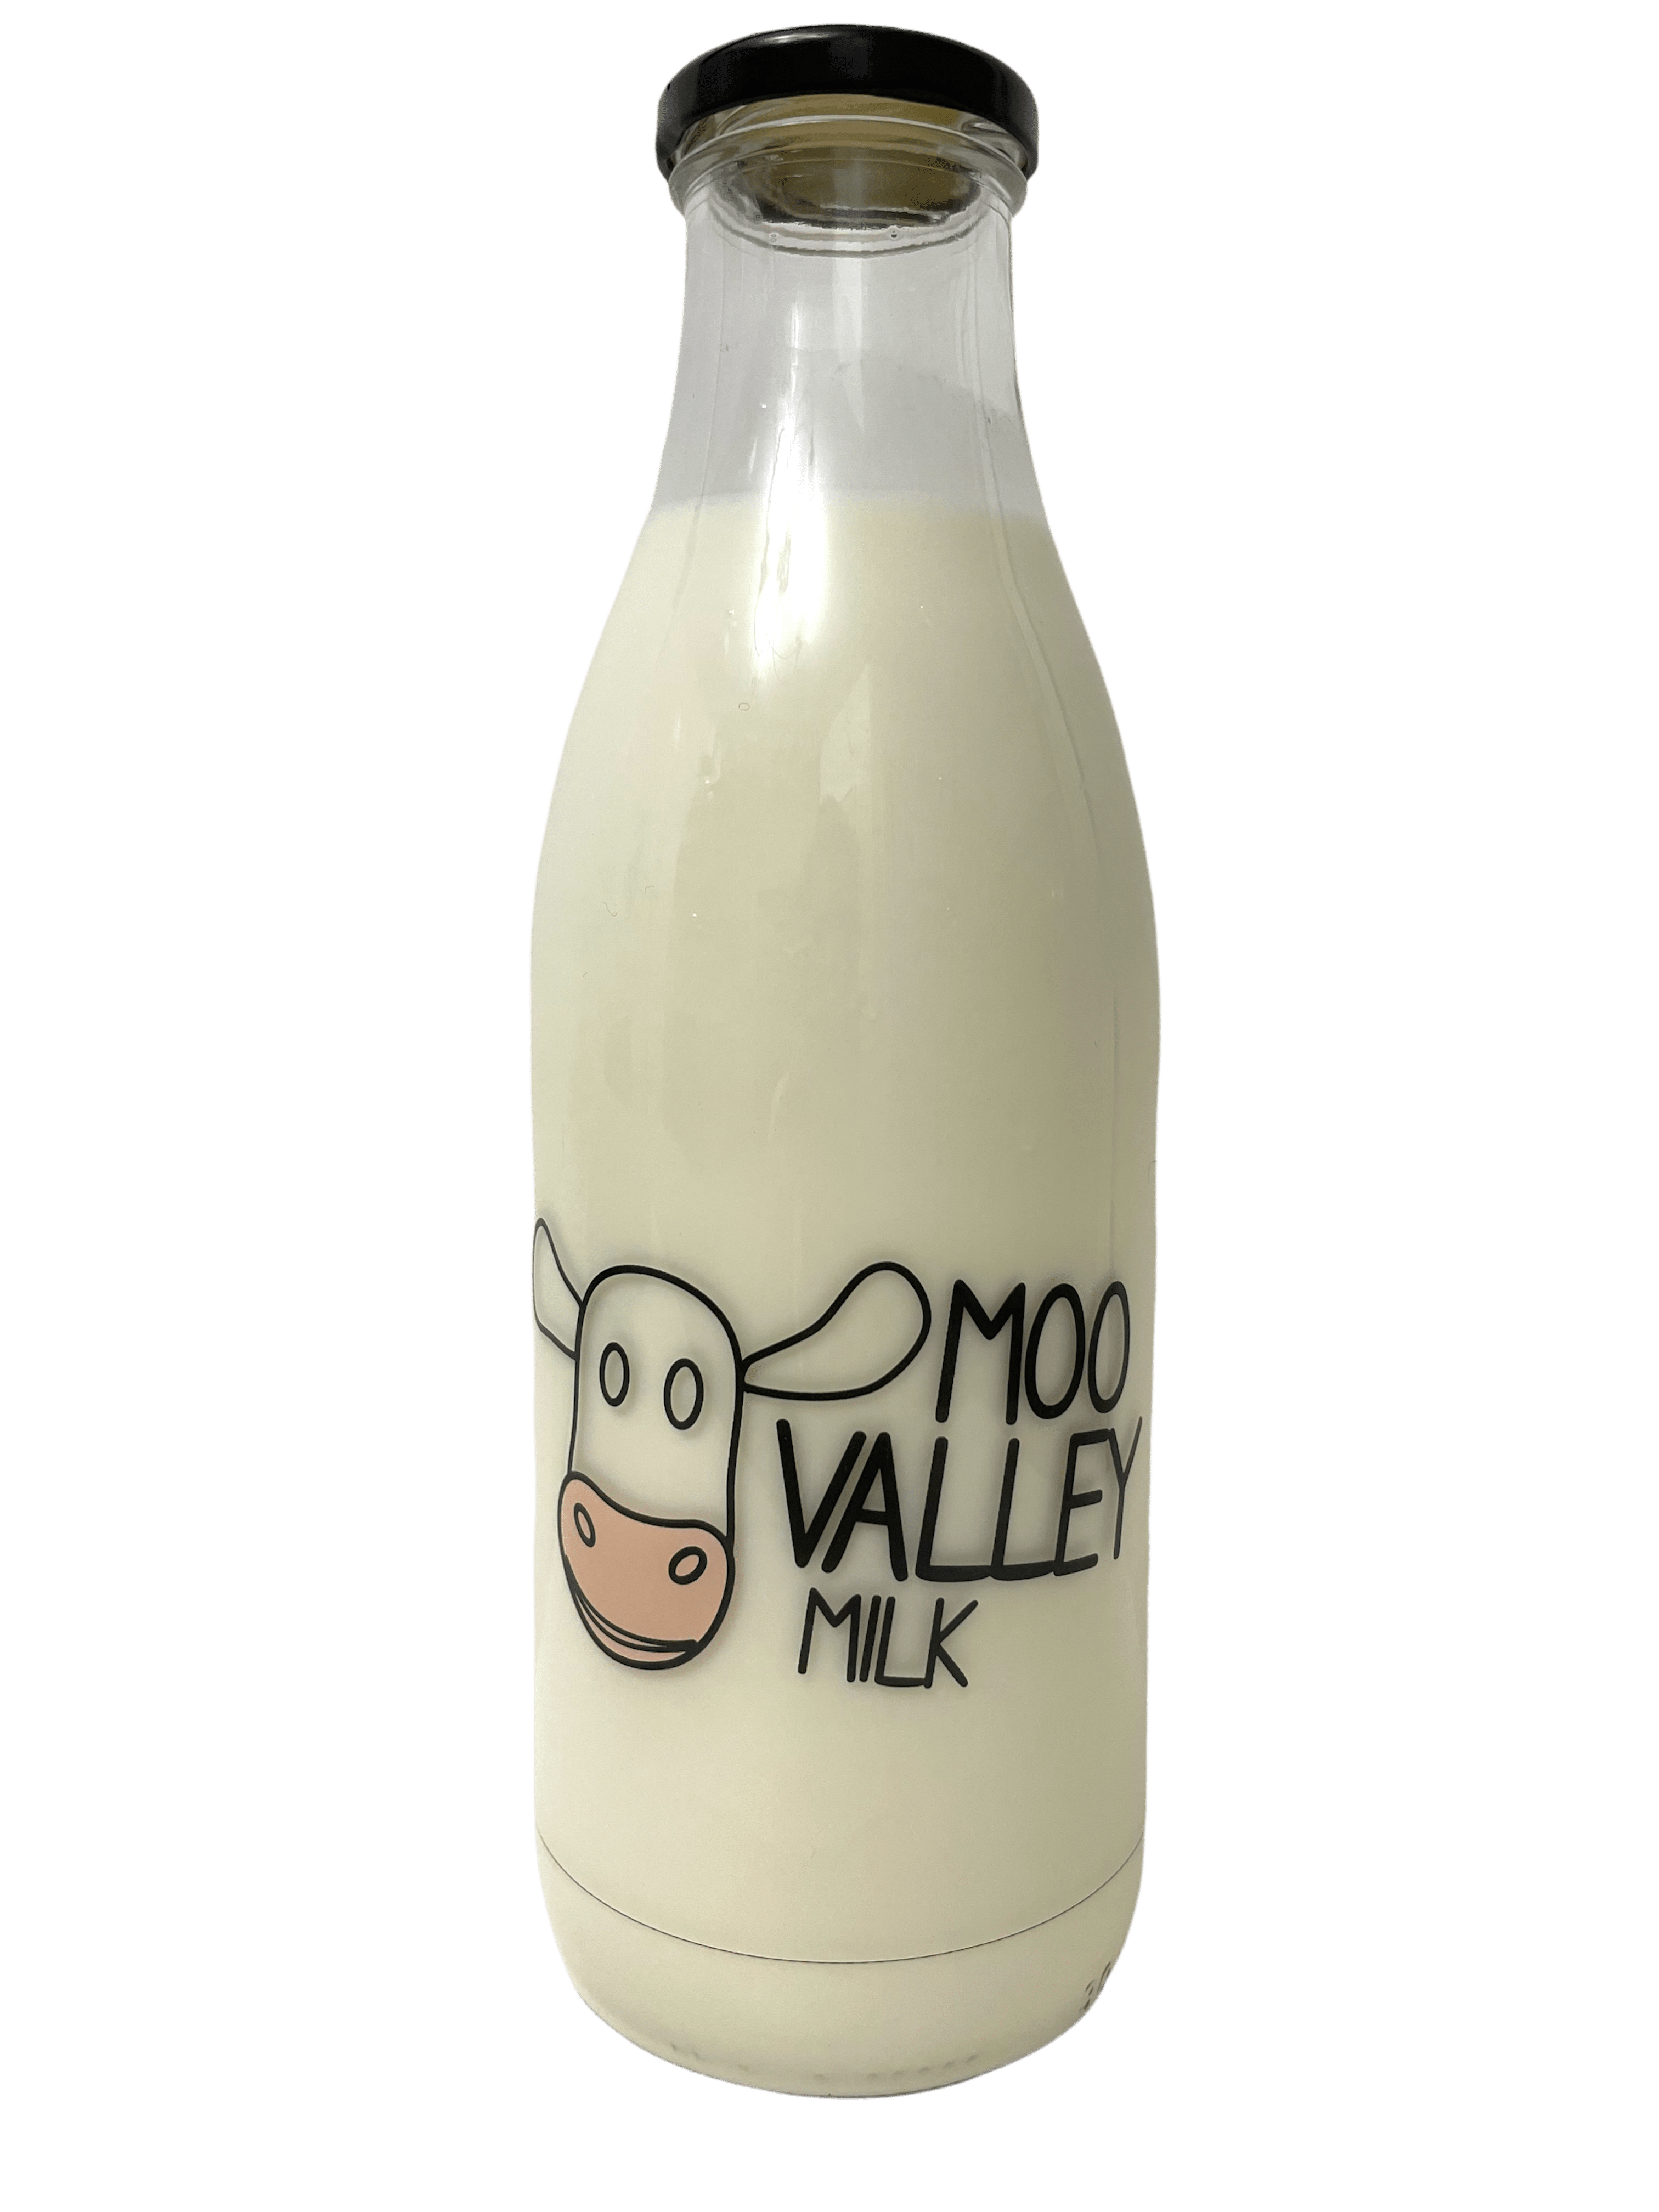 Moo valley milk - kelis.info